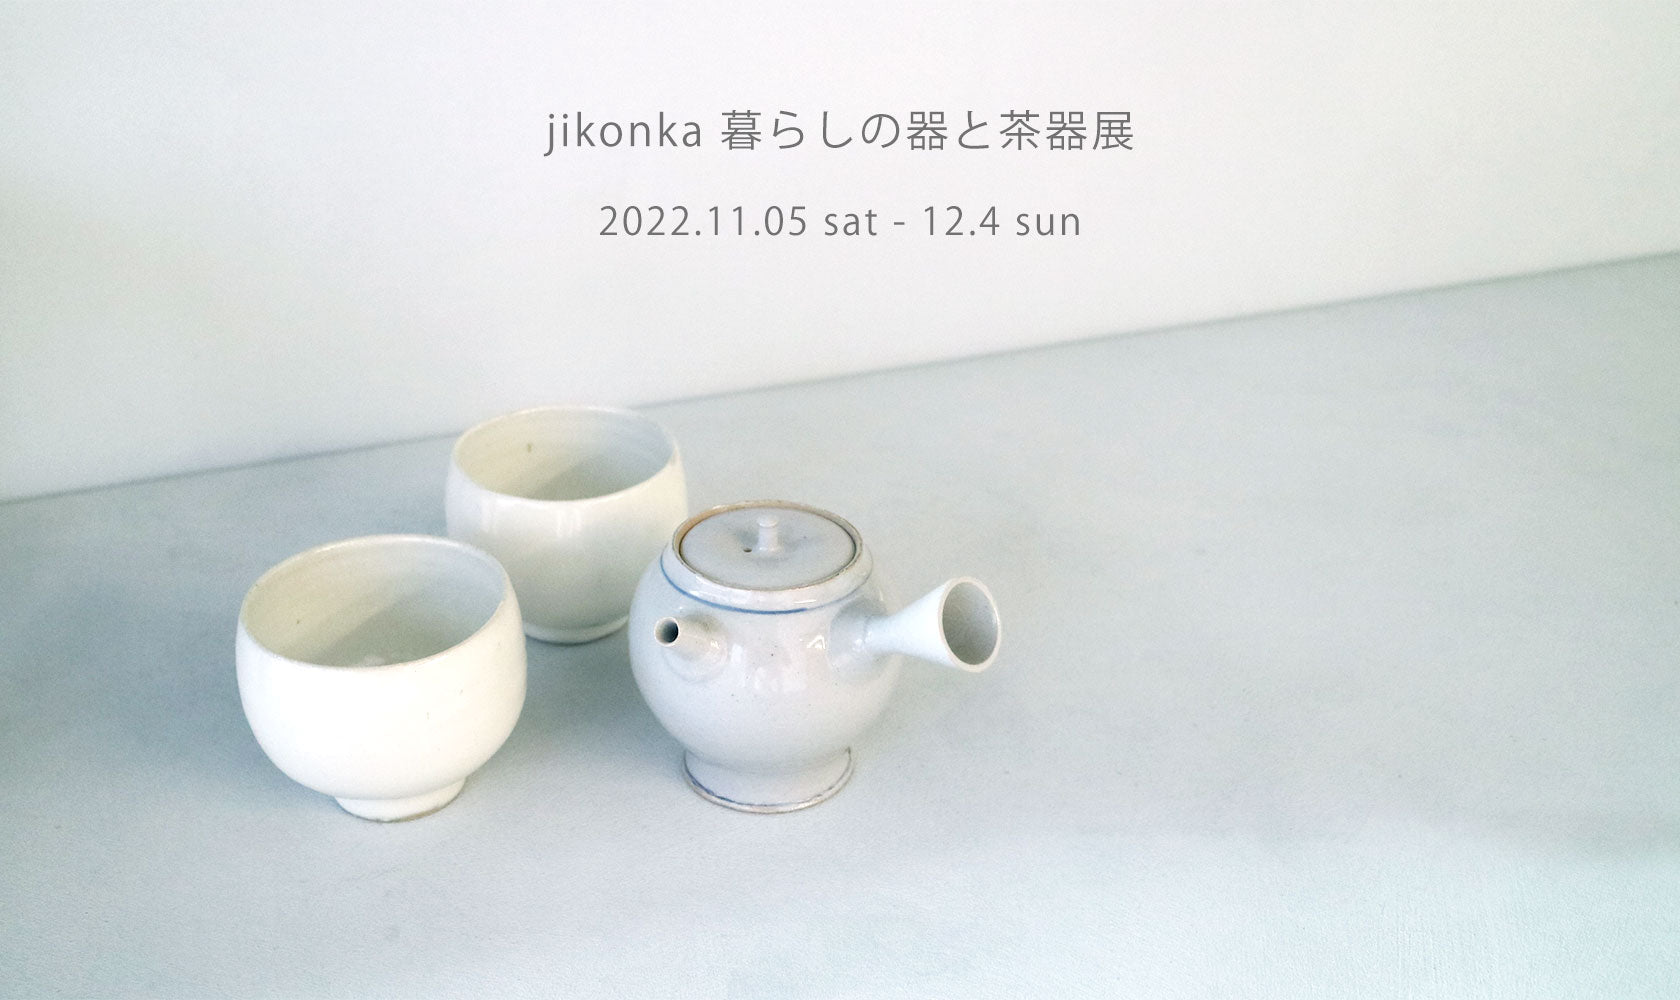 jikonka Living vessel and tea set exhibition at SIRI SIRI Shop